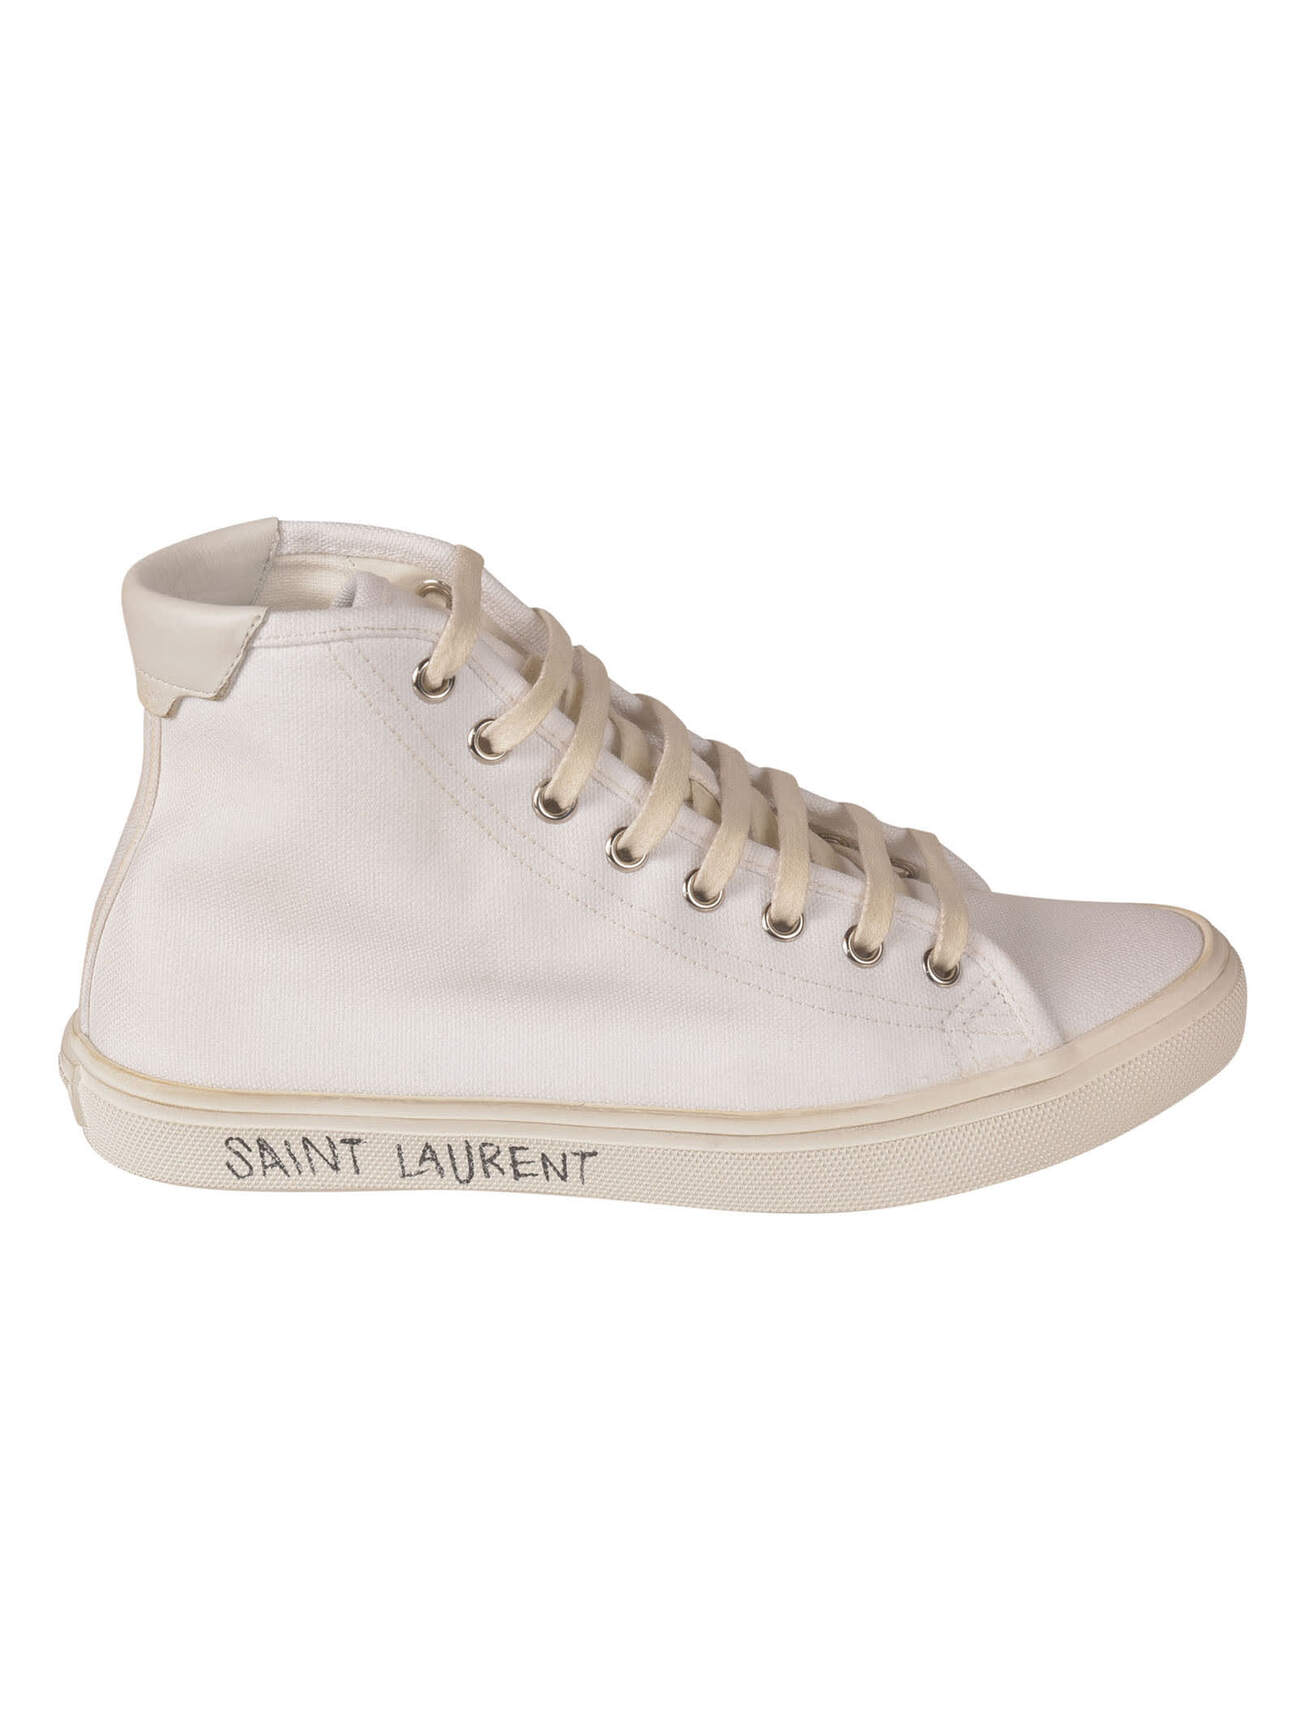 Saint Laurent Malibu Mid Sneakers in white